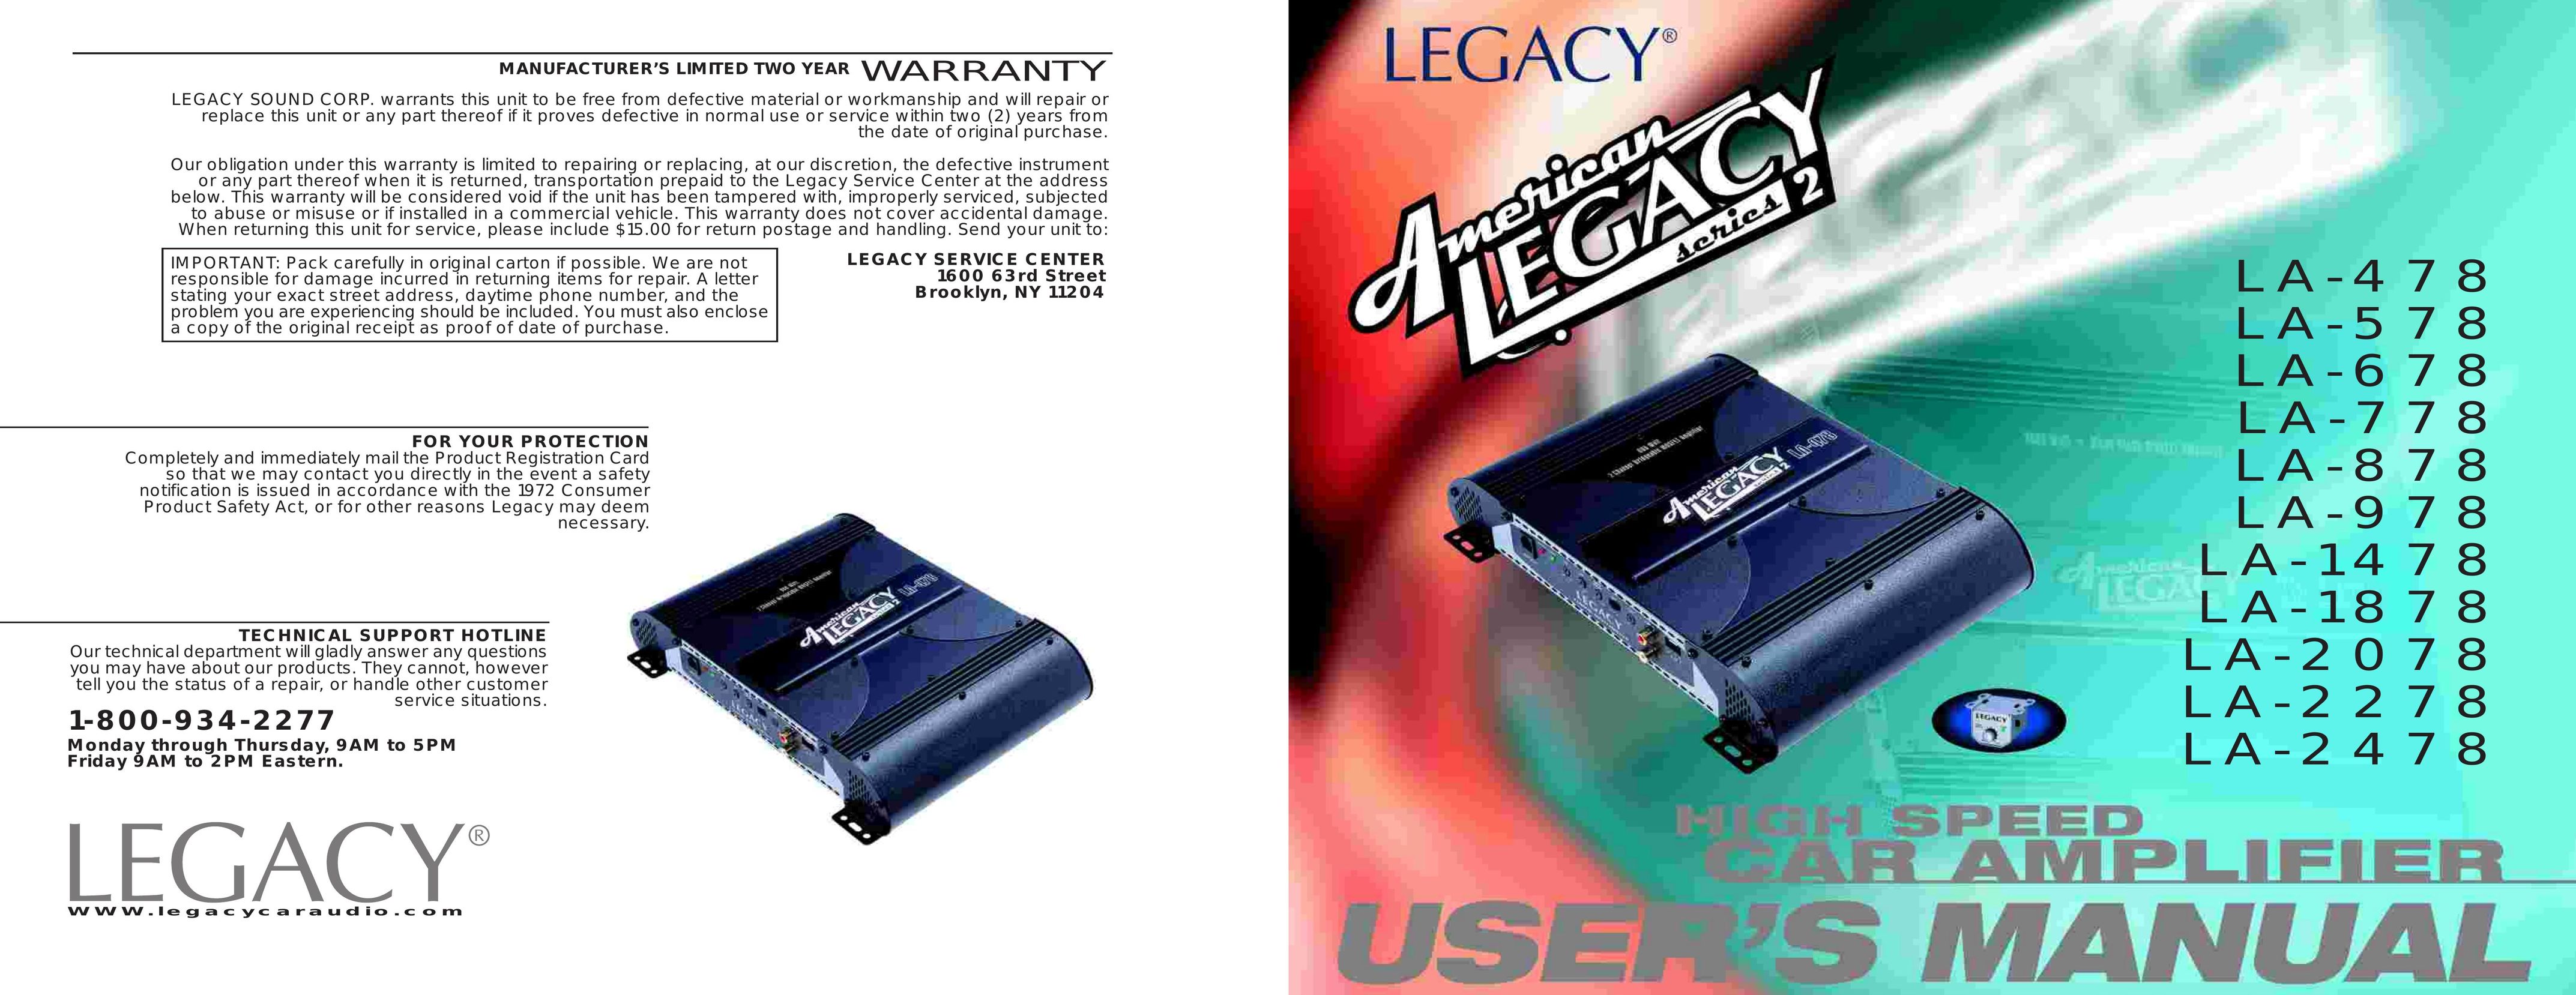 Legacy Car Audio LA-1878 Car Amplifier User Manual